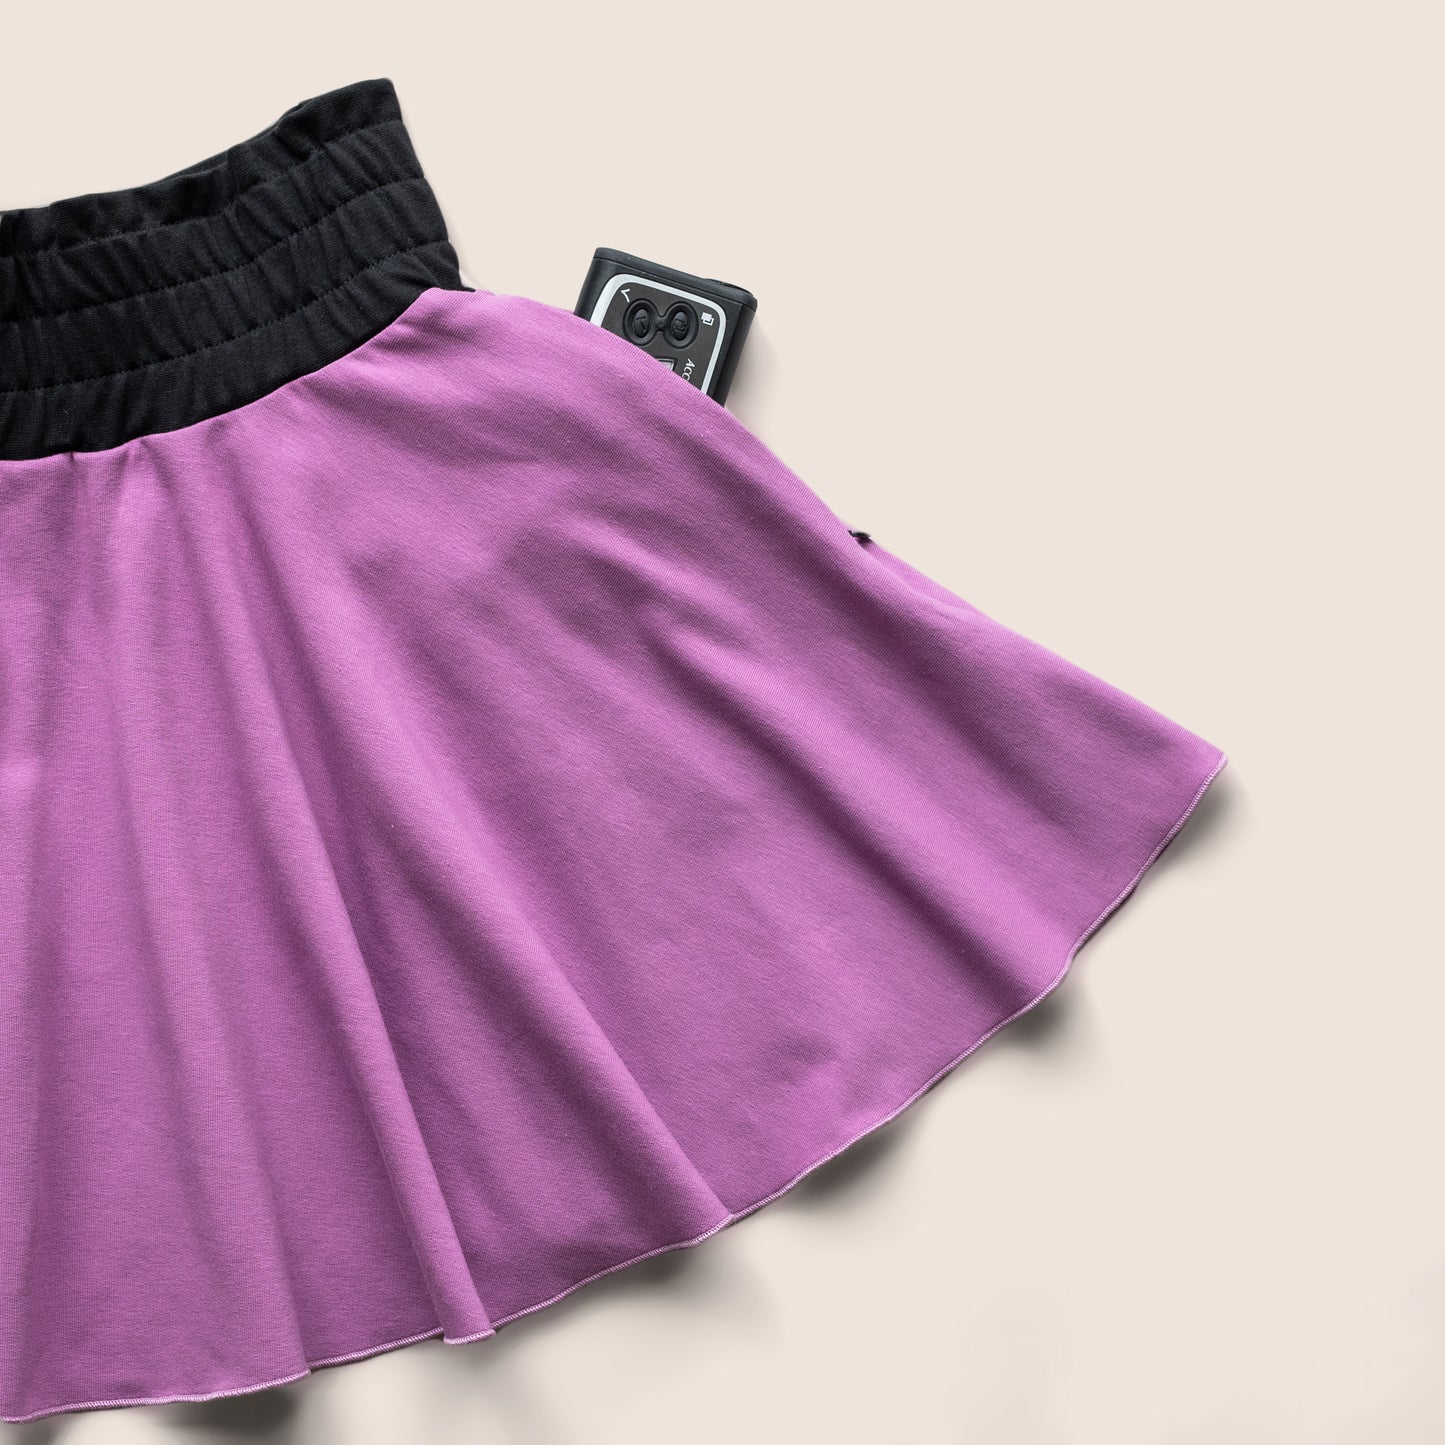 Type 1 Diabetes Clothing - Girls Skirt Bubblegum Purple with pockets | Our Pocket Hero